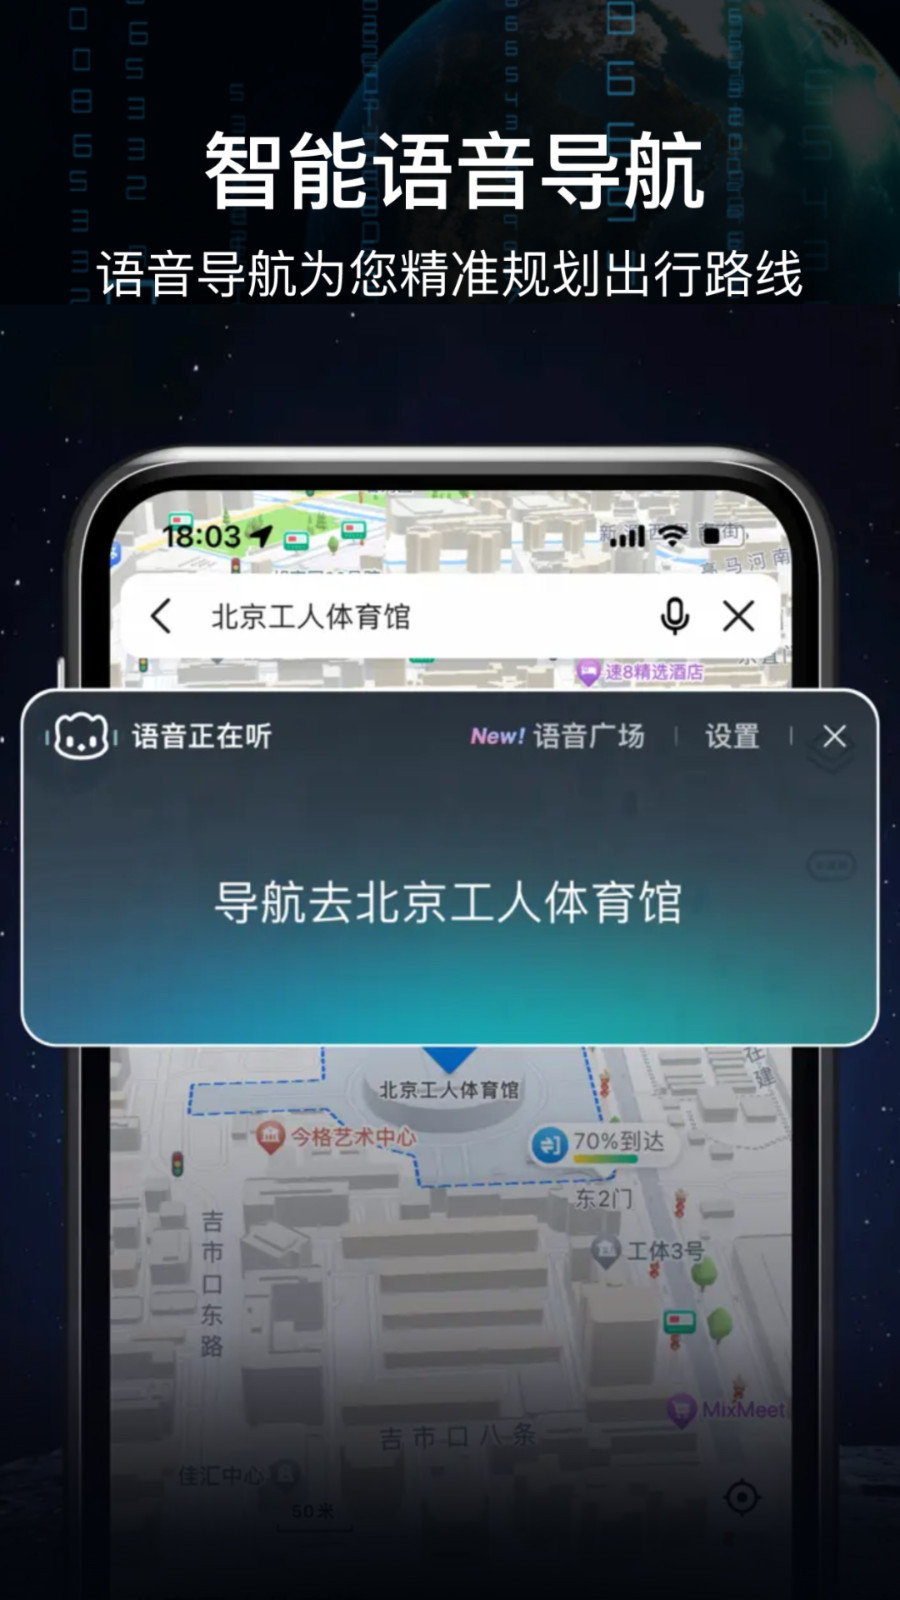 AR语音实景导航手机版app下载安装